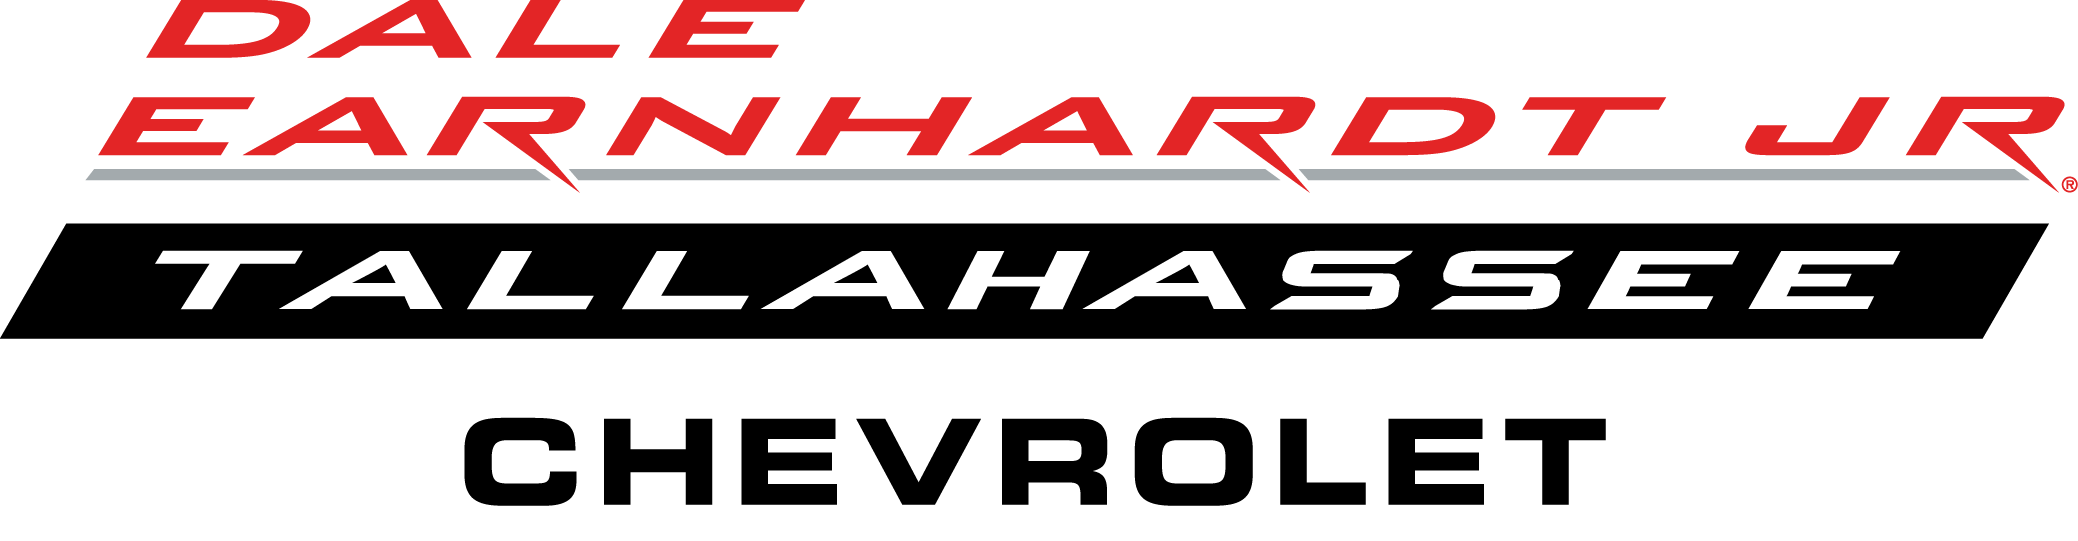 Earnhardt Logo - Dale Earnhardt Jr. Chevrolet | New, Used Car Dealer in Tallahassee